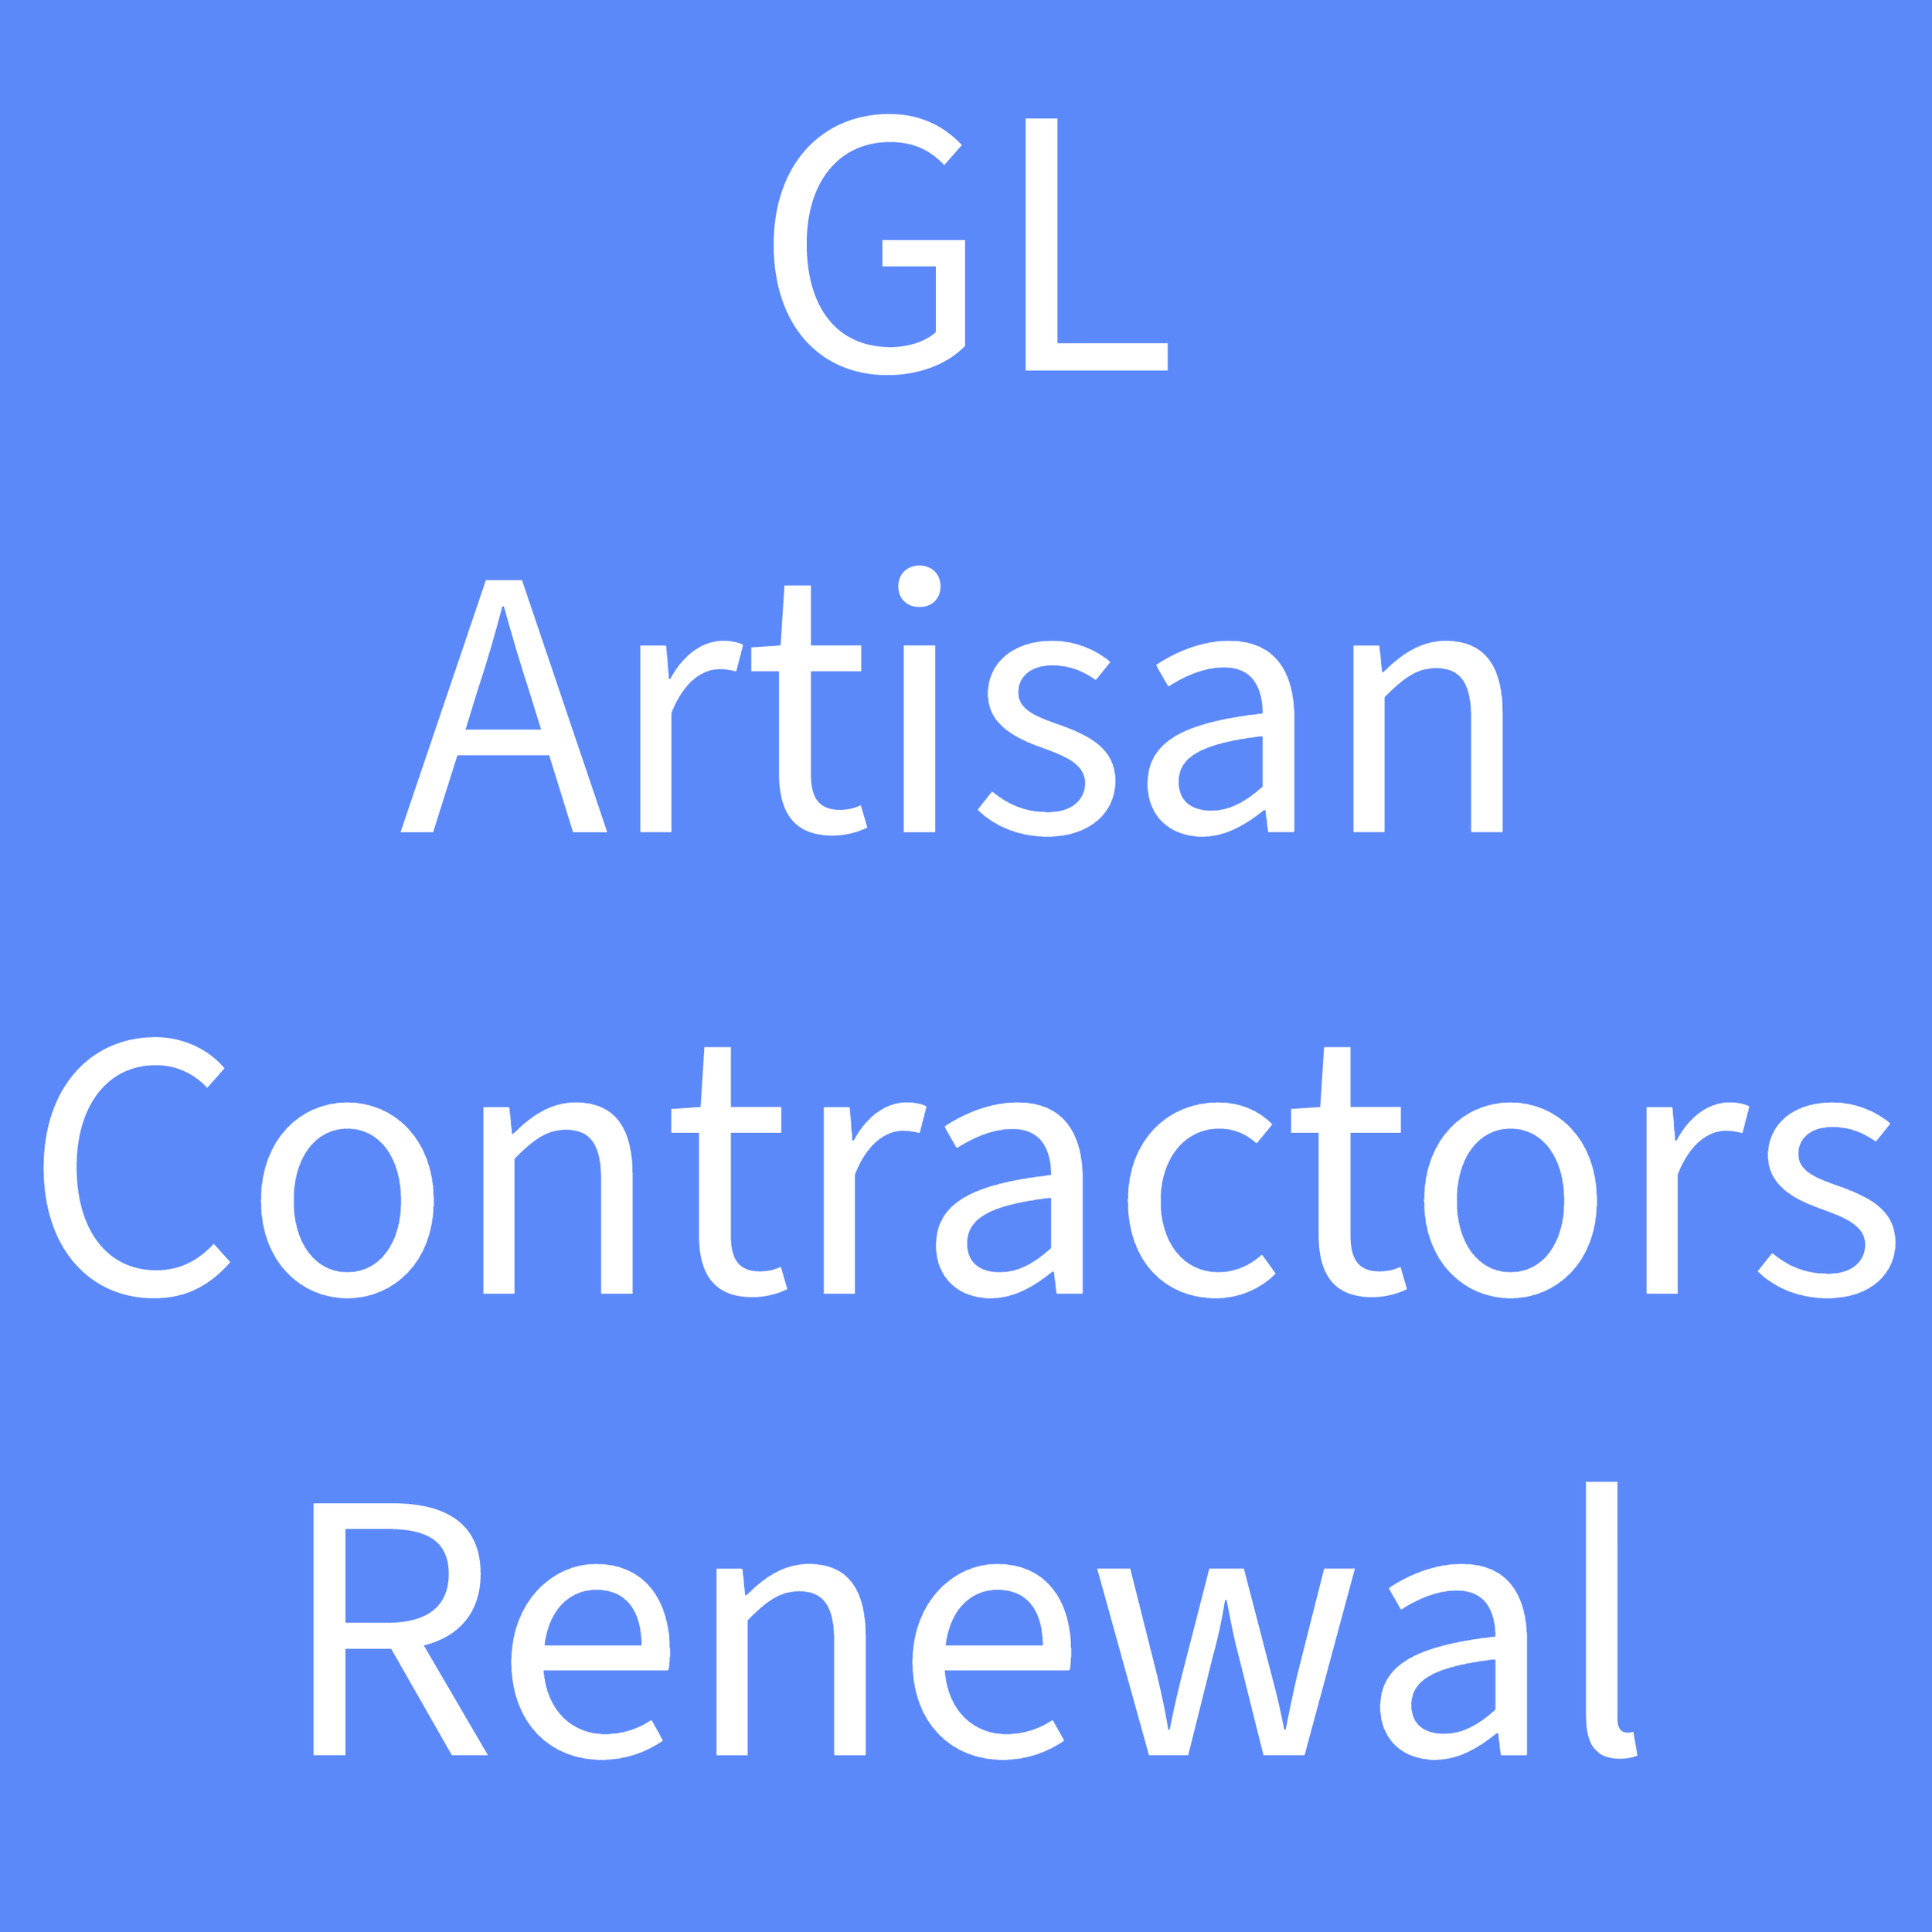 GL Artisan Contractors Renewal